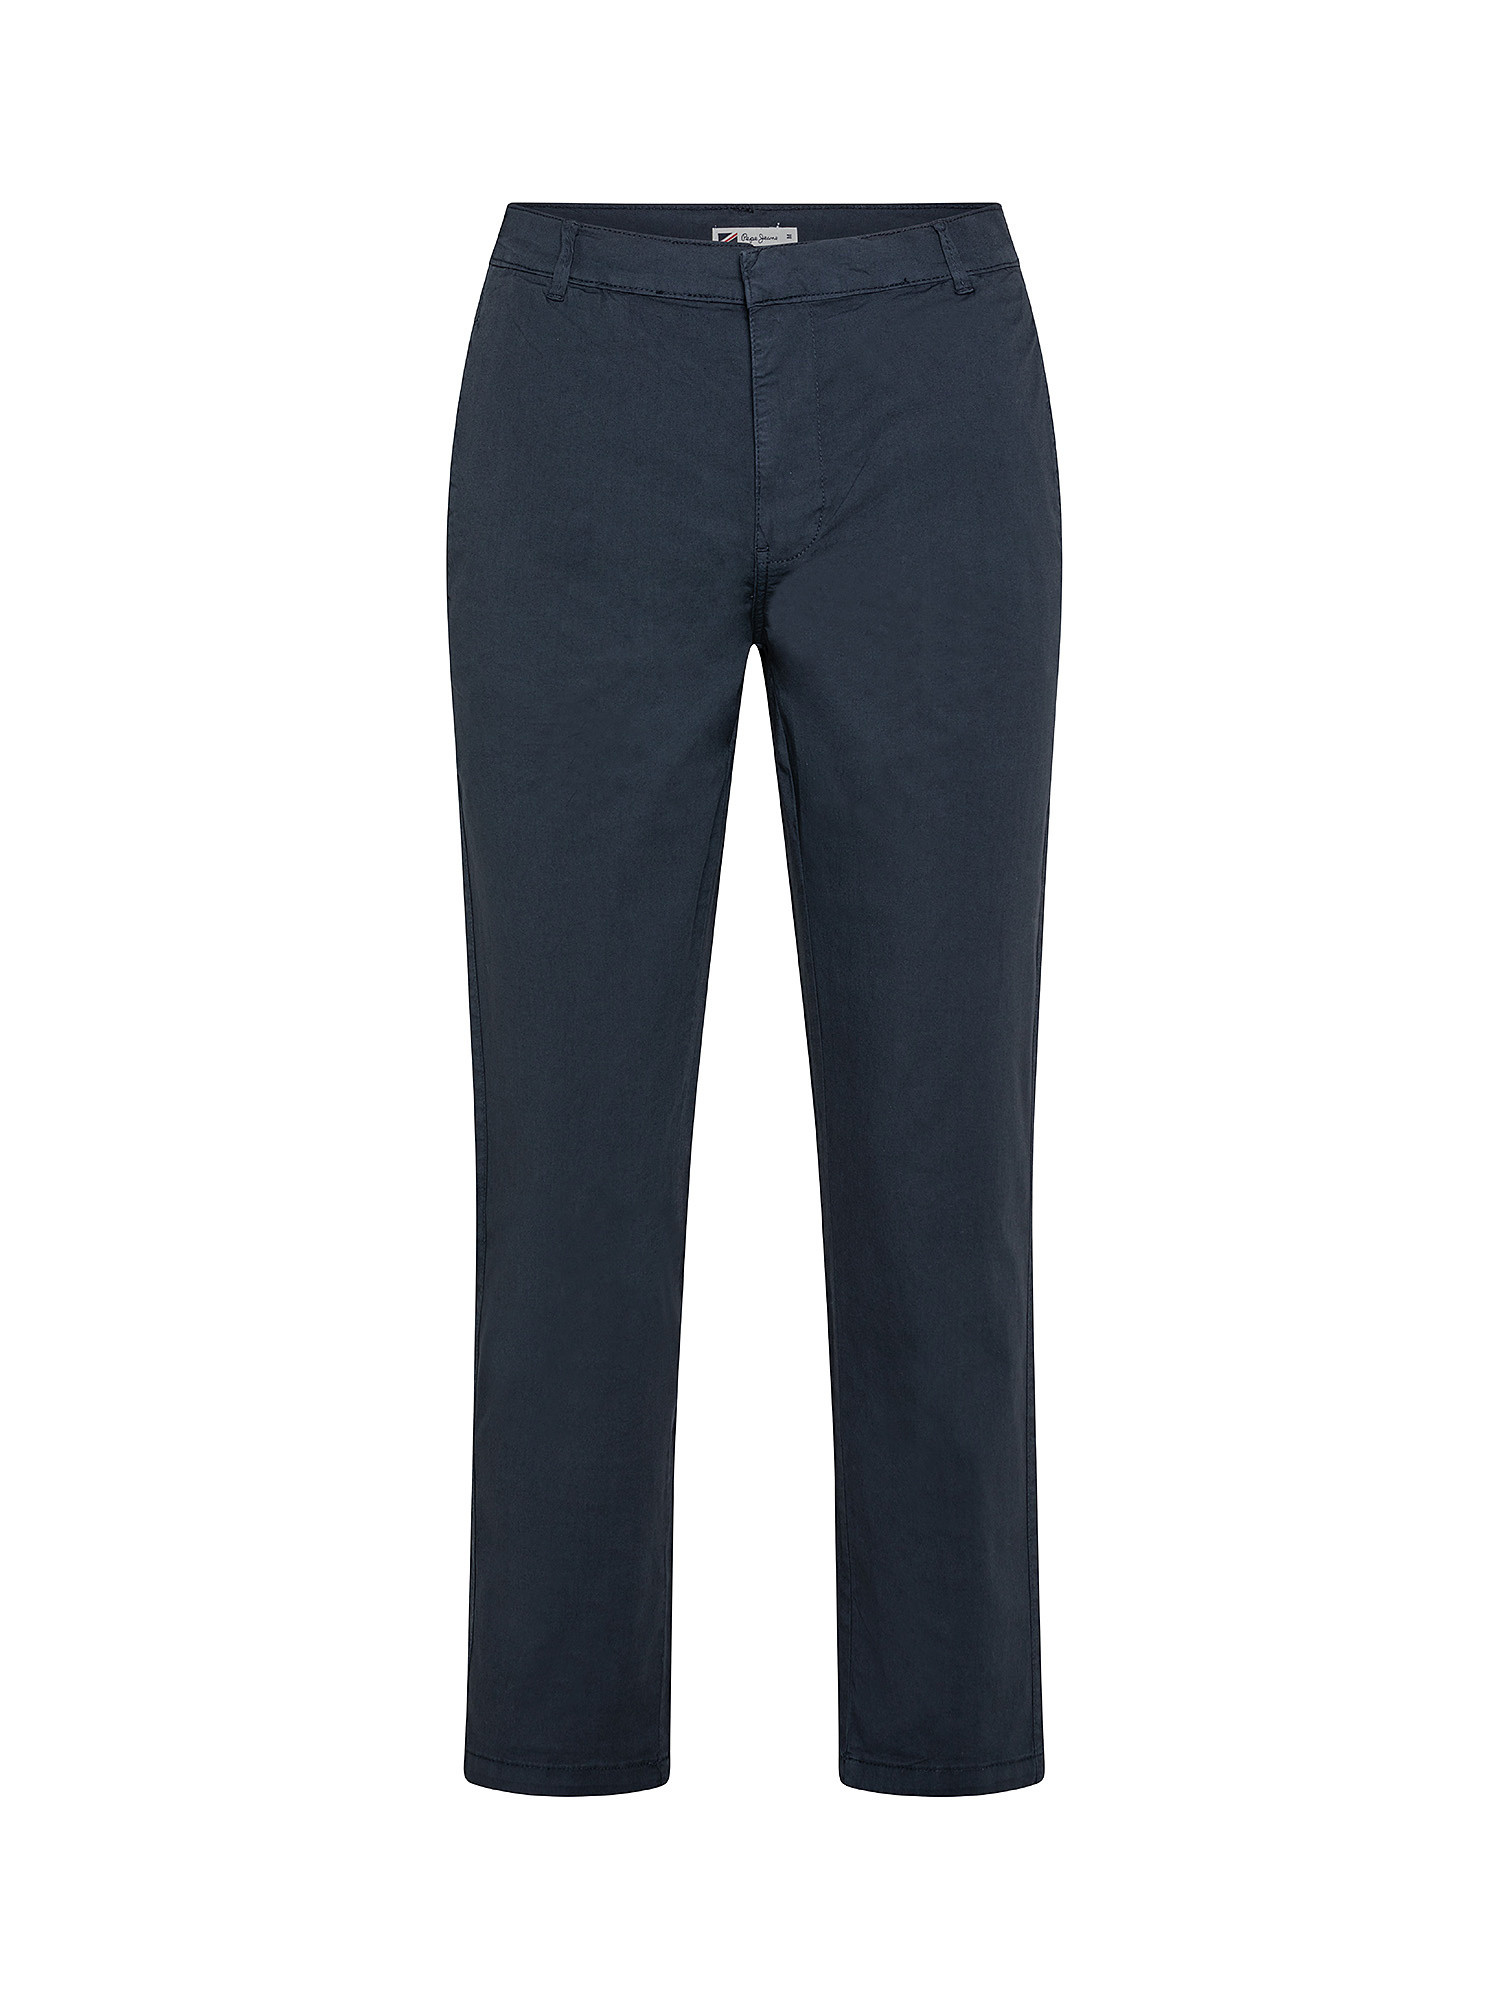 Pantaloni abito Jareth, Blu scuro, large image number 0